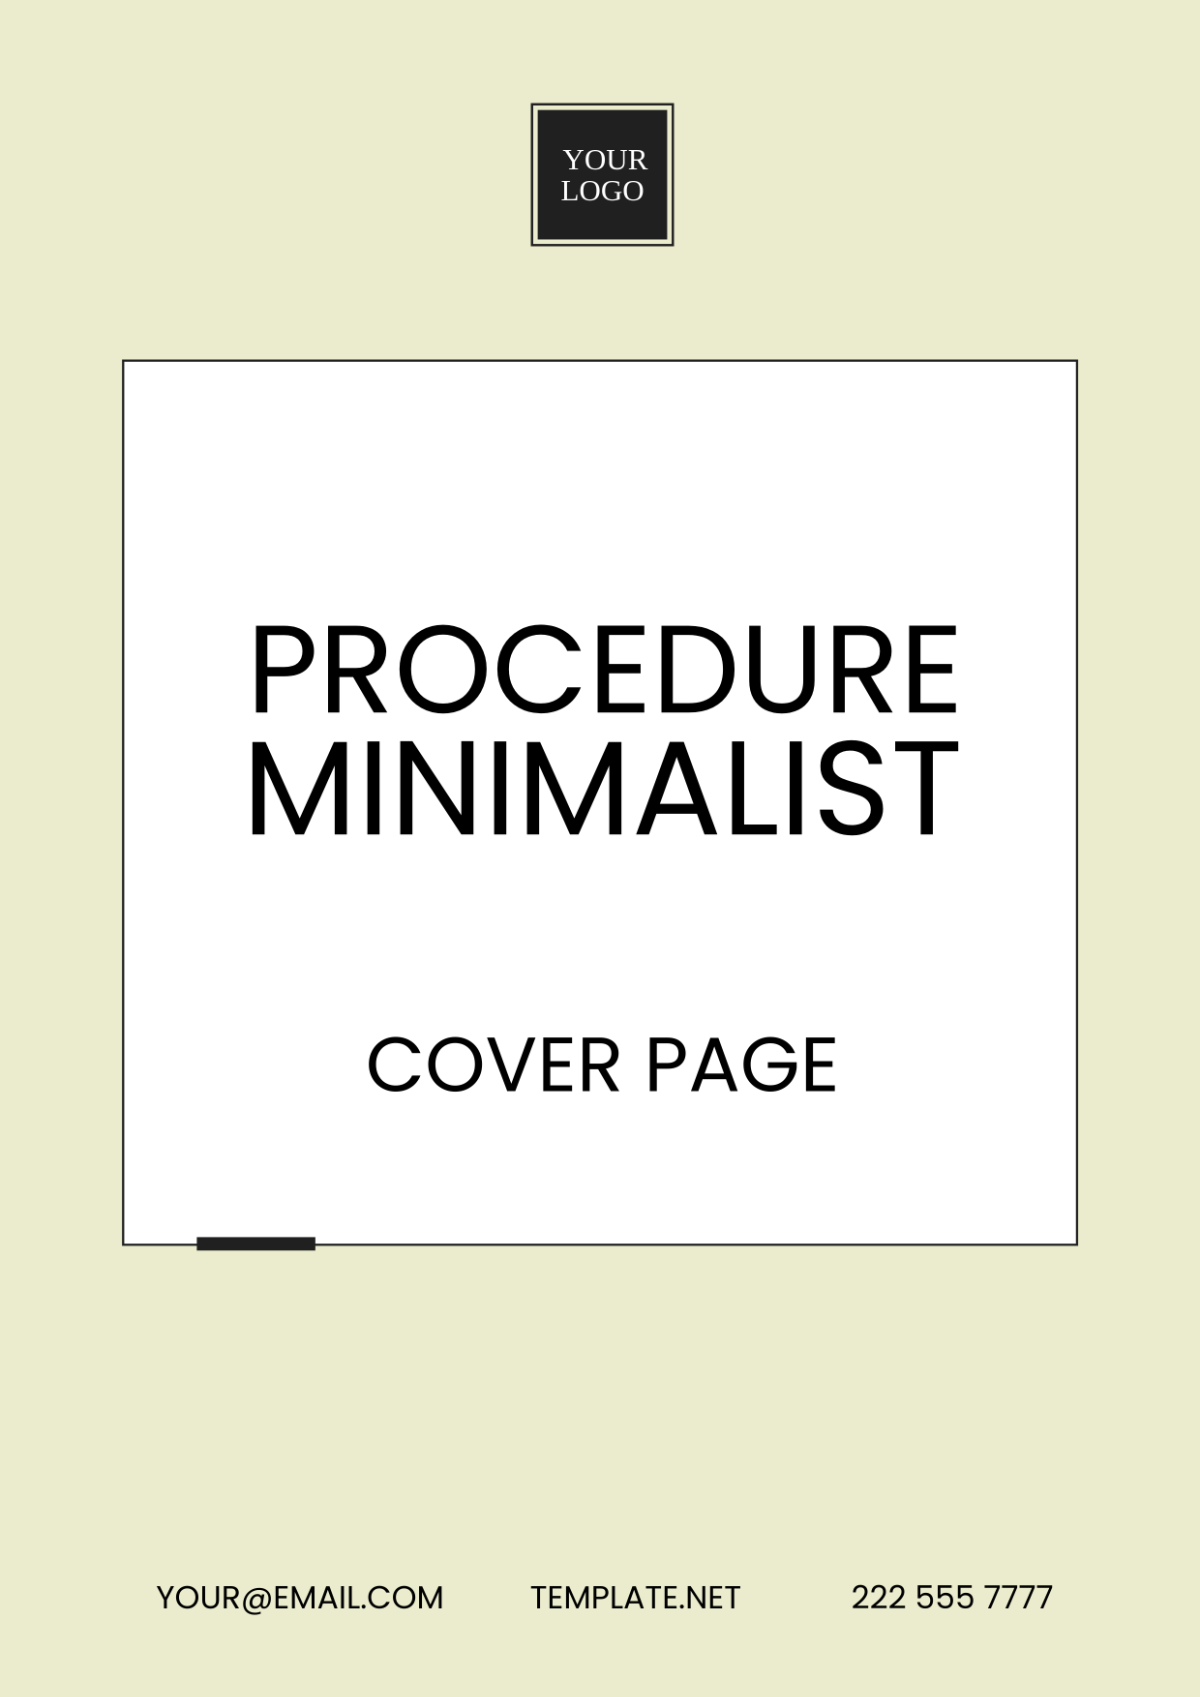 Procedure Minimalist Cover Page